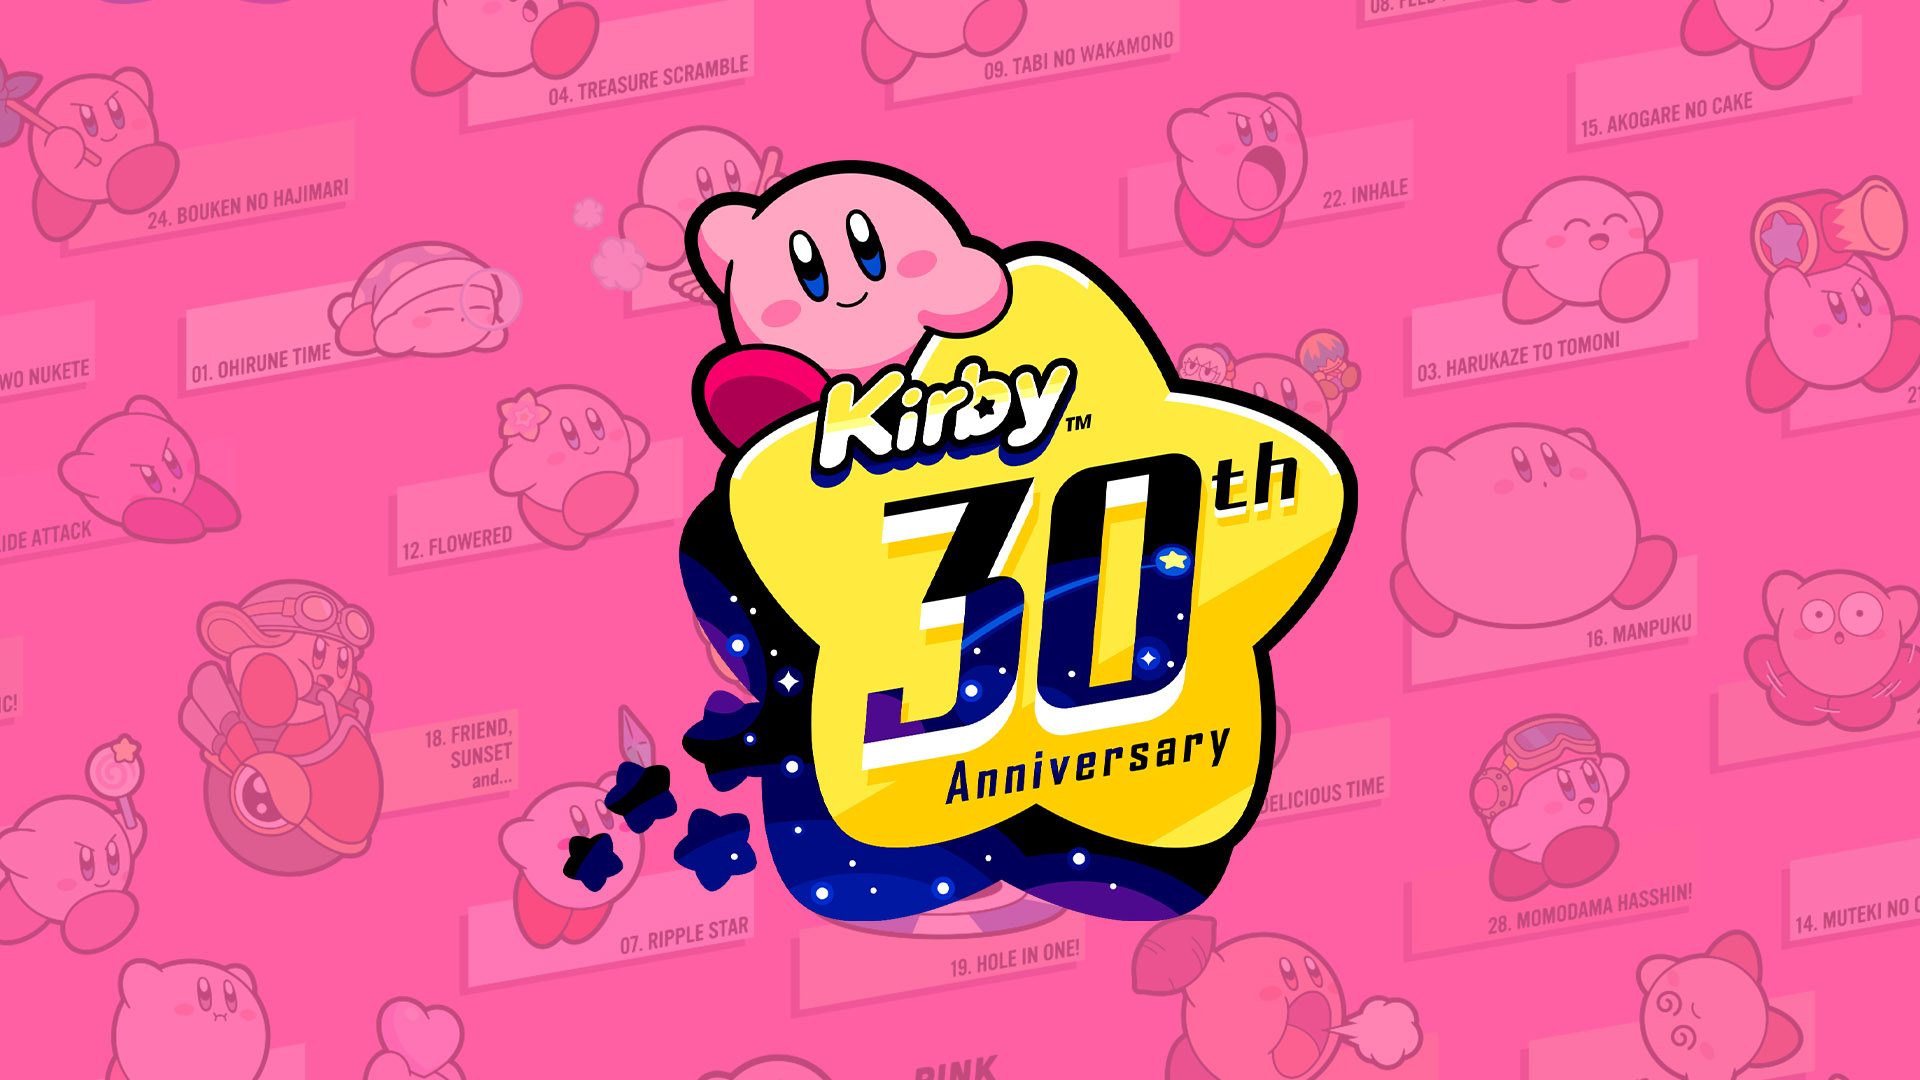 Wallpaper  Kirbys 25th Anniversary  Rewards  My Nintendo